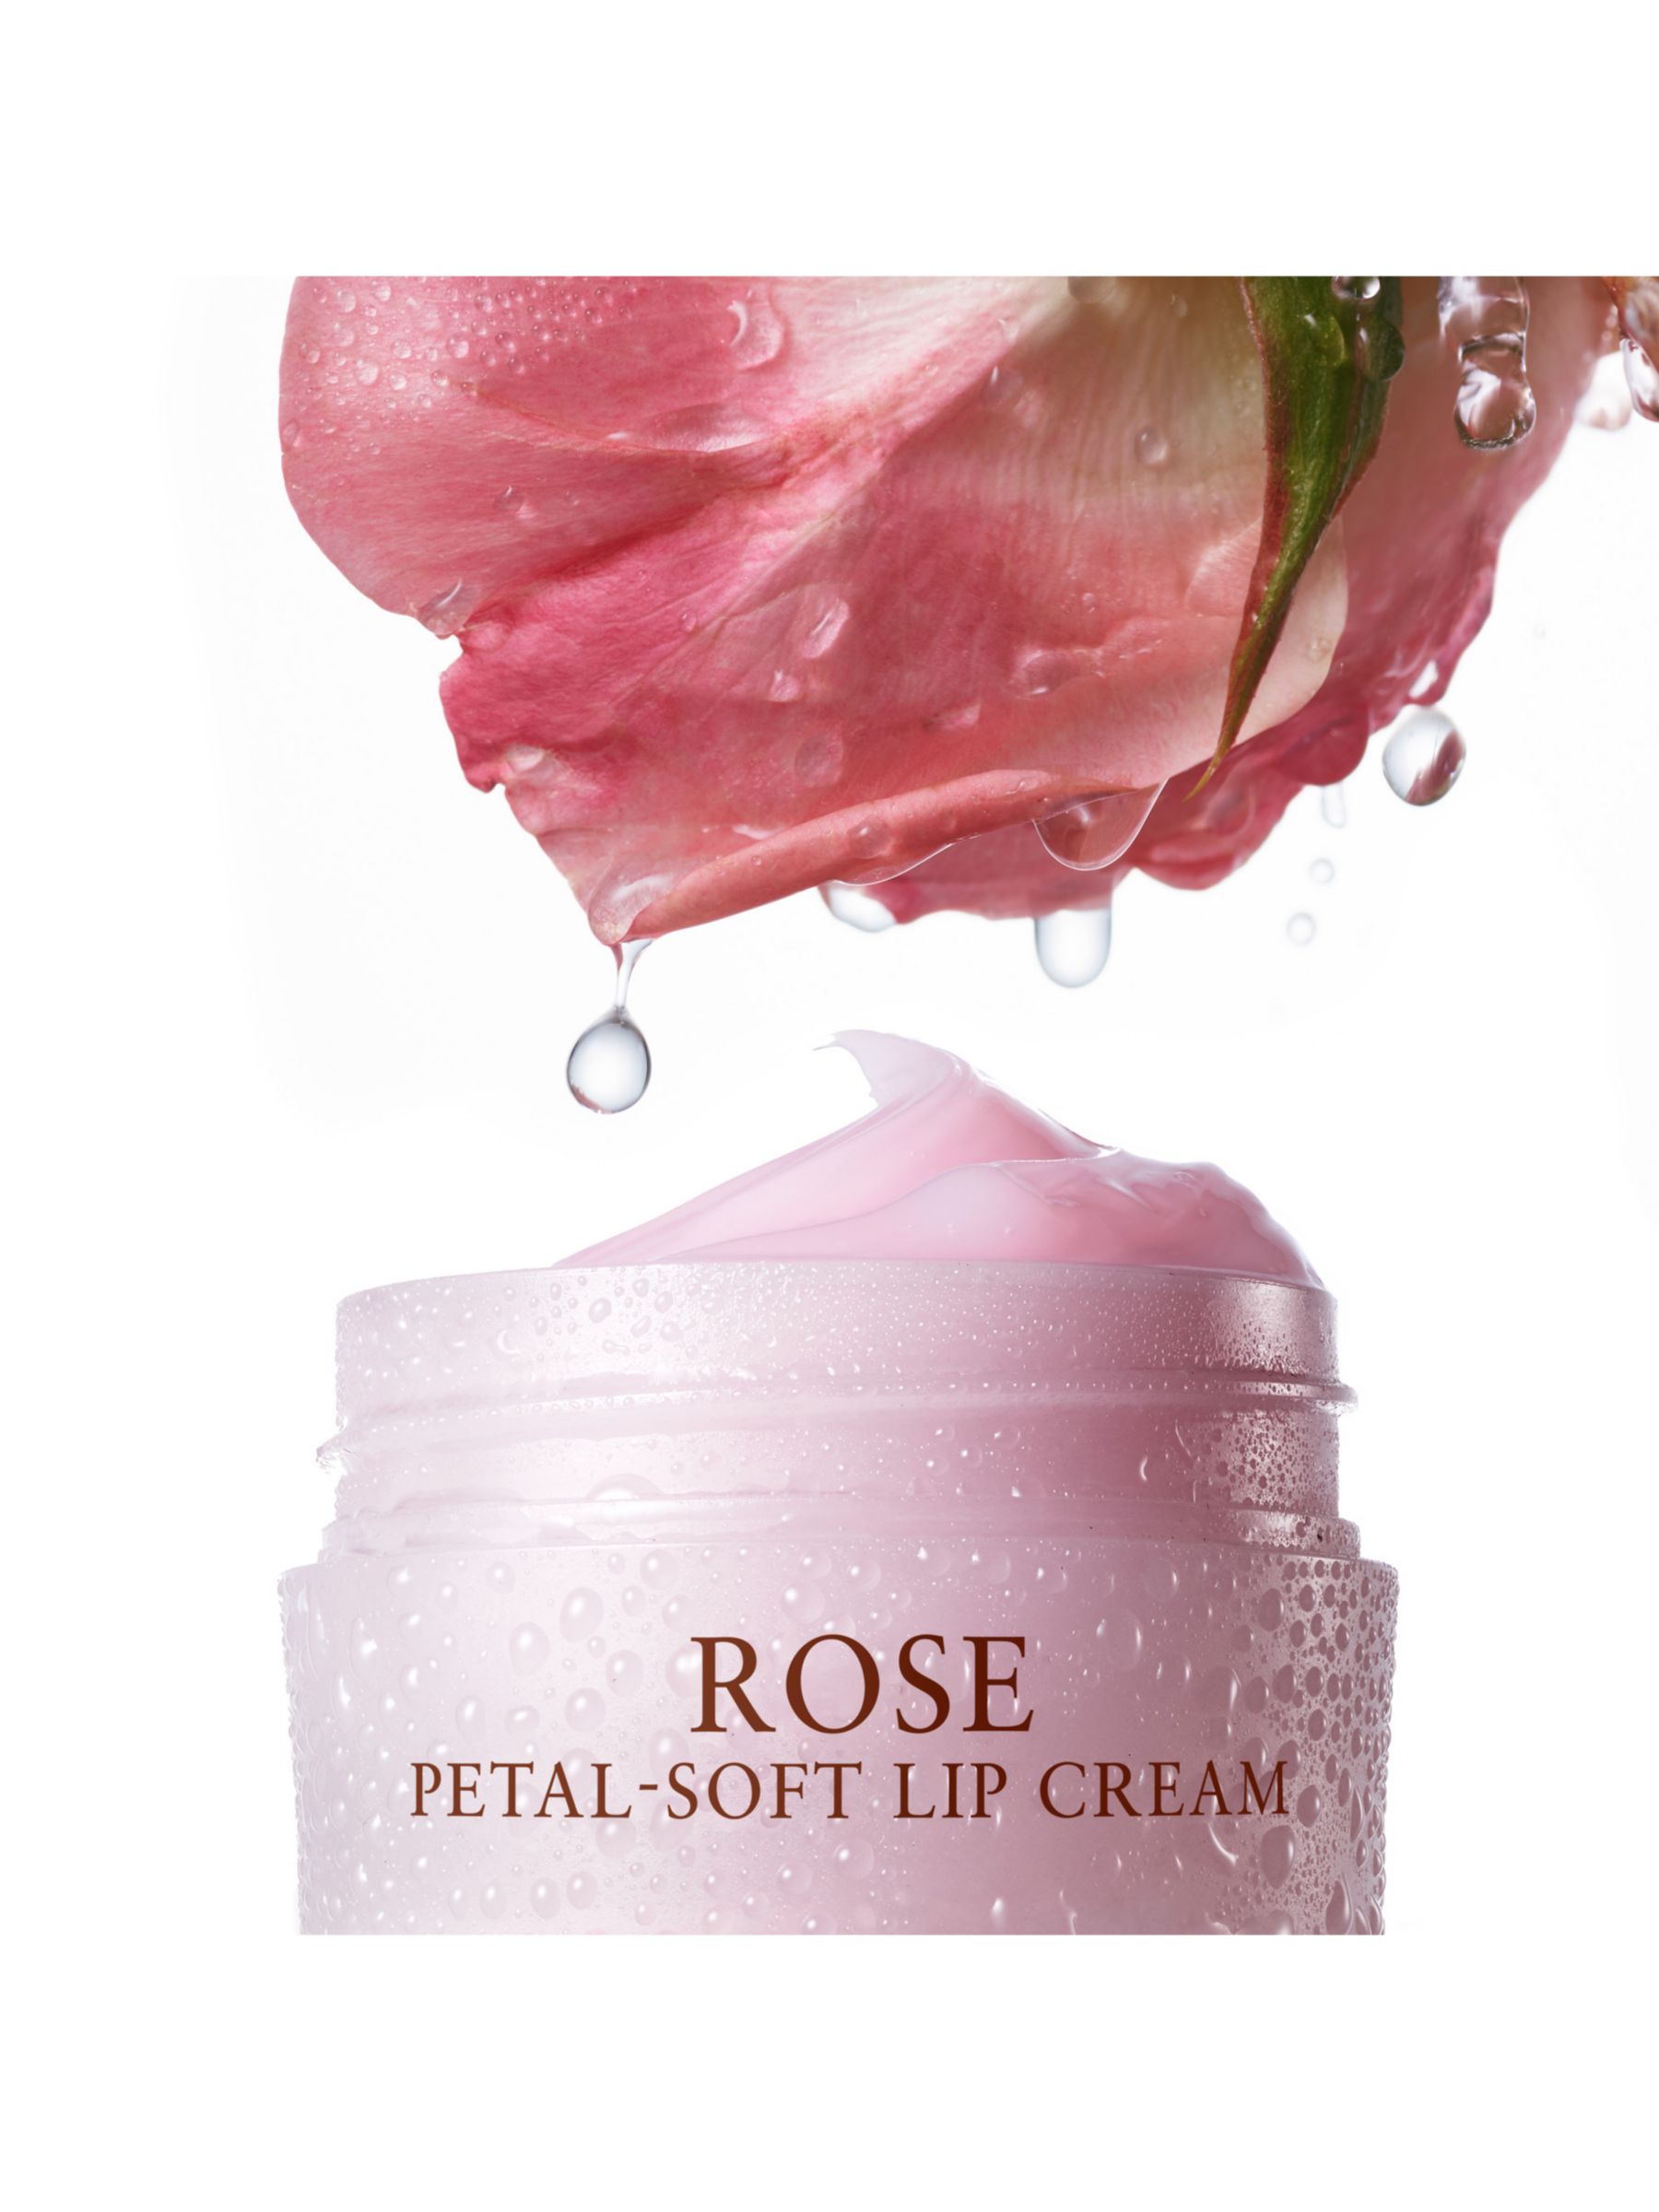 Fresh Rose Petal-Soft Lip Cream, 10g 5